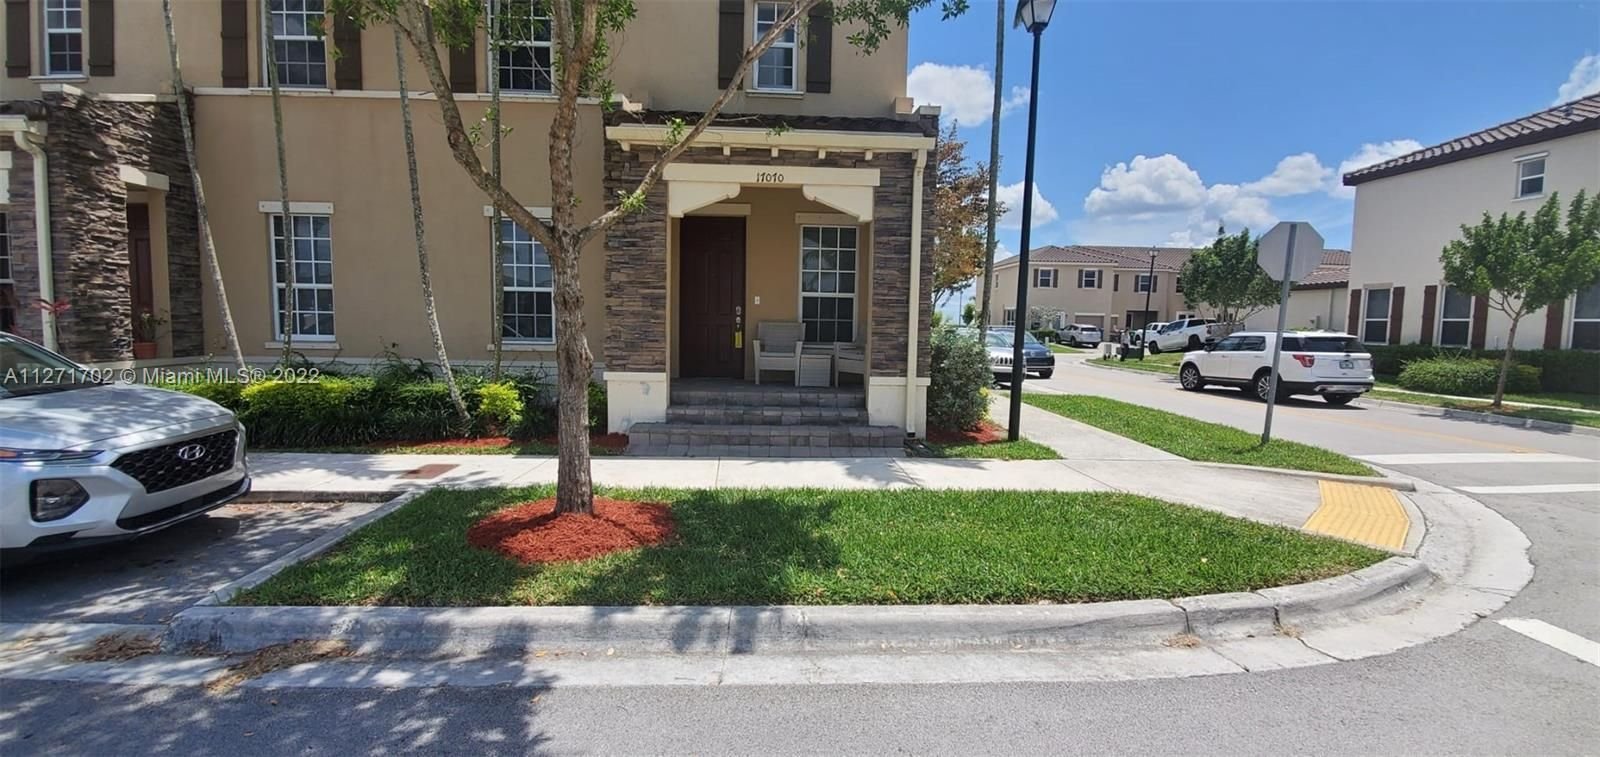 Real estate property located at 17070 95th Ter #17070, Miami-Dade County, Miami, FL